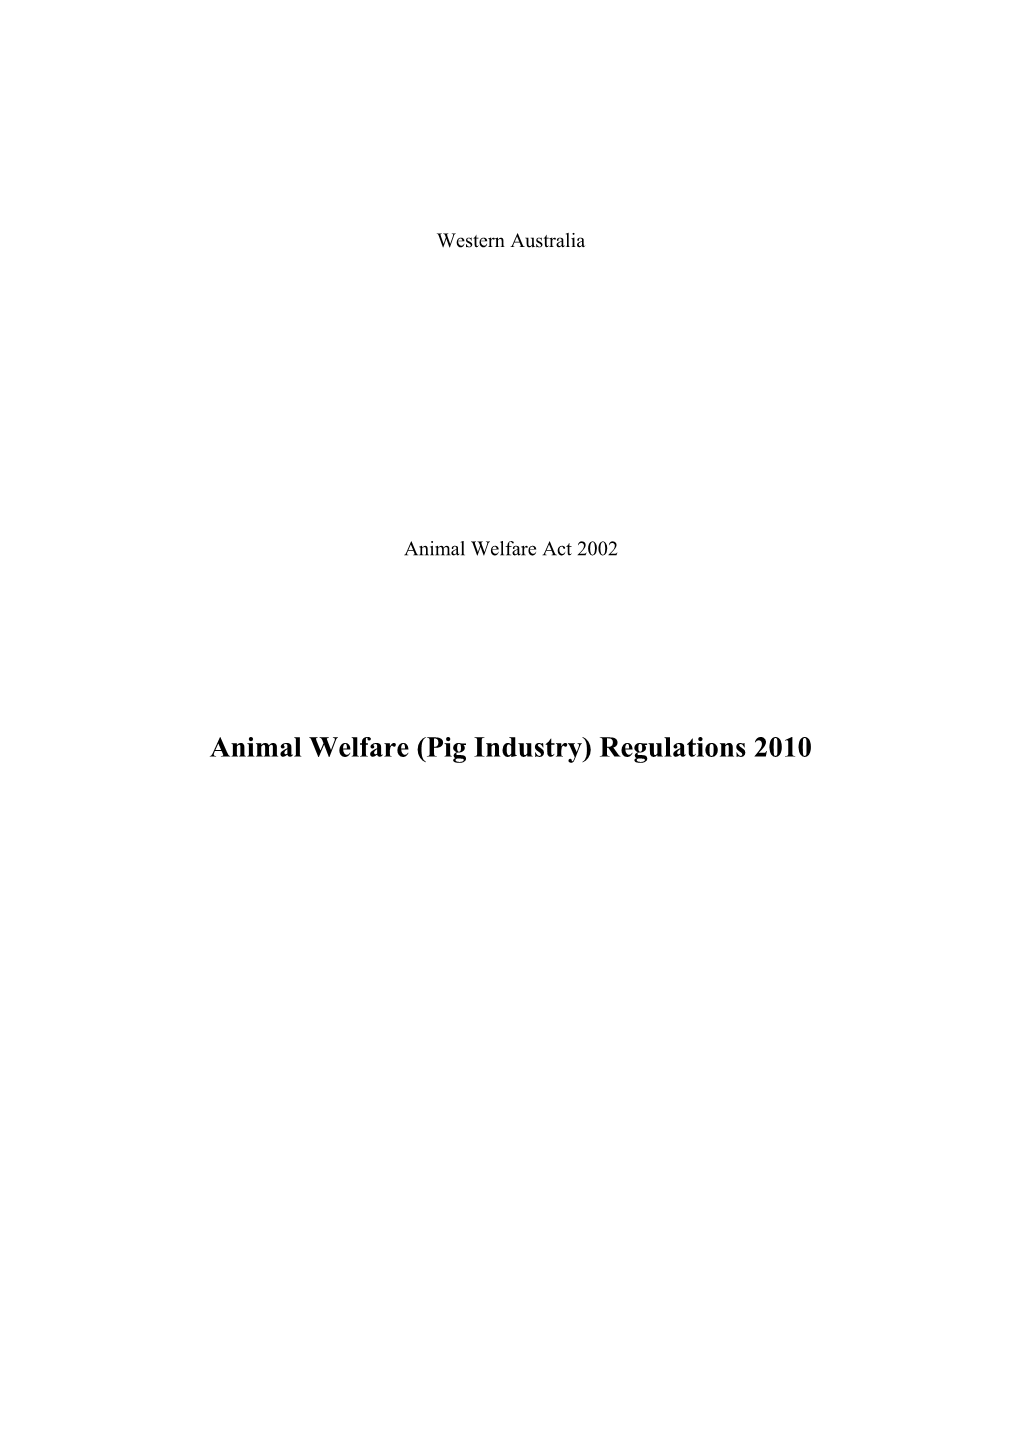 Animal Welfare (Pig Industry) Regulations 2010 - 00-B0-01